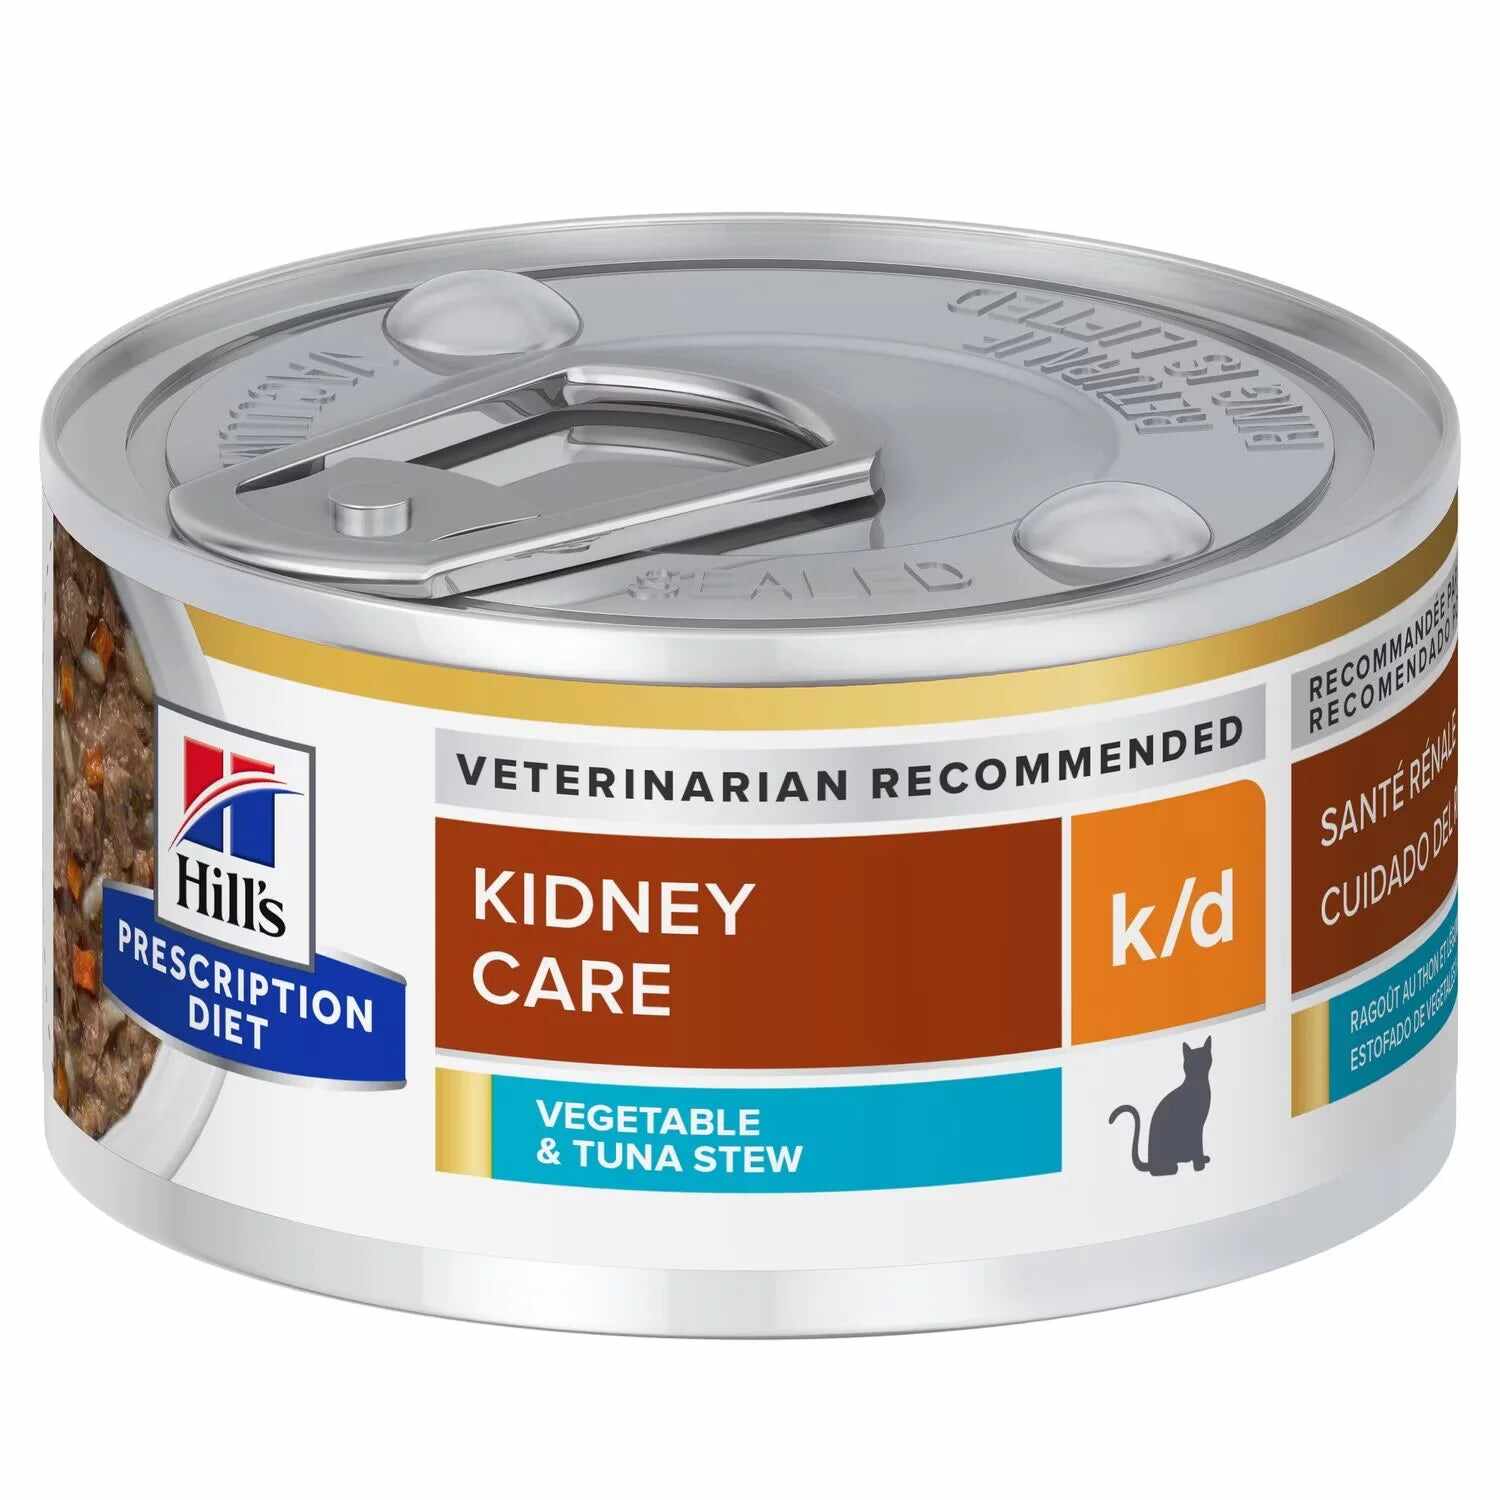 Hill's Prescription Diet - Feline k/d Kidney Care Vegetable & Tuna Stew 2.9oz